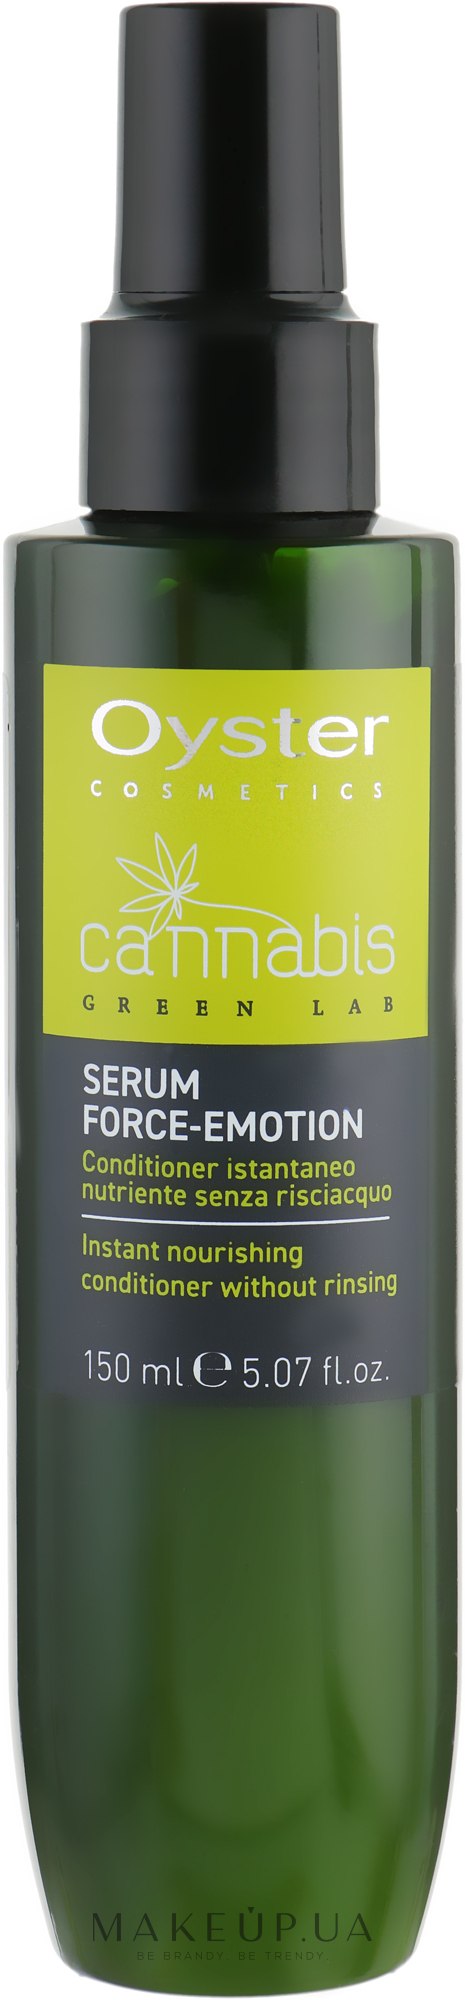 Сыворотка для волос - Oyster Cosmetics Cannabis Green Lab Serum Force-Emotion — фото 150ml